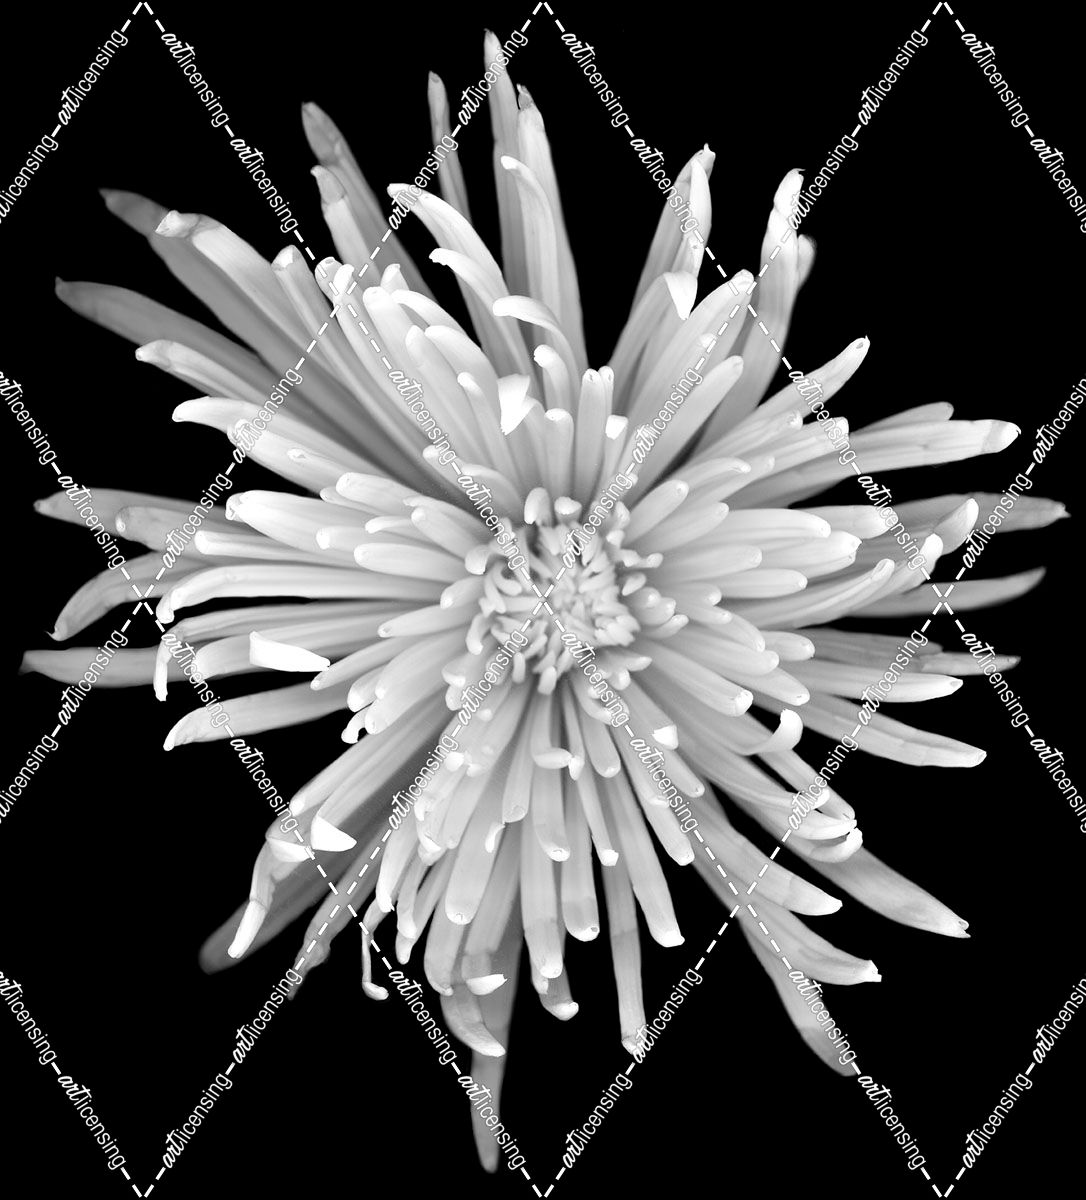 Chrysanthemum #1 b-w